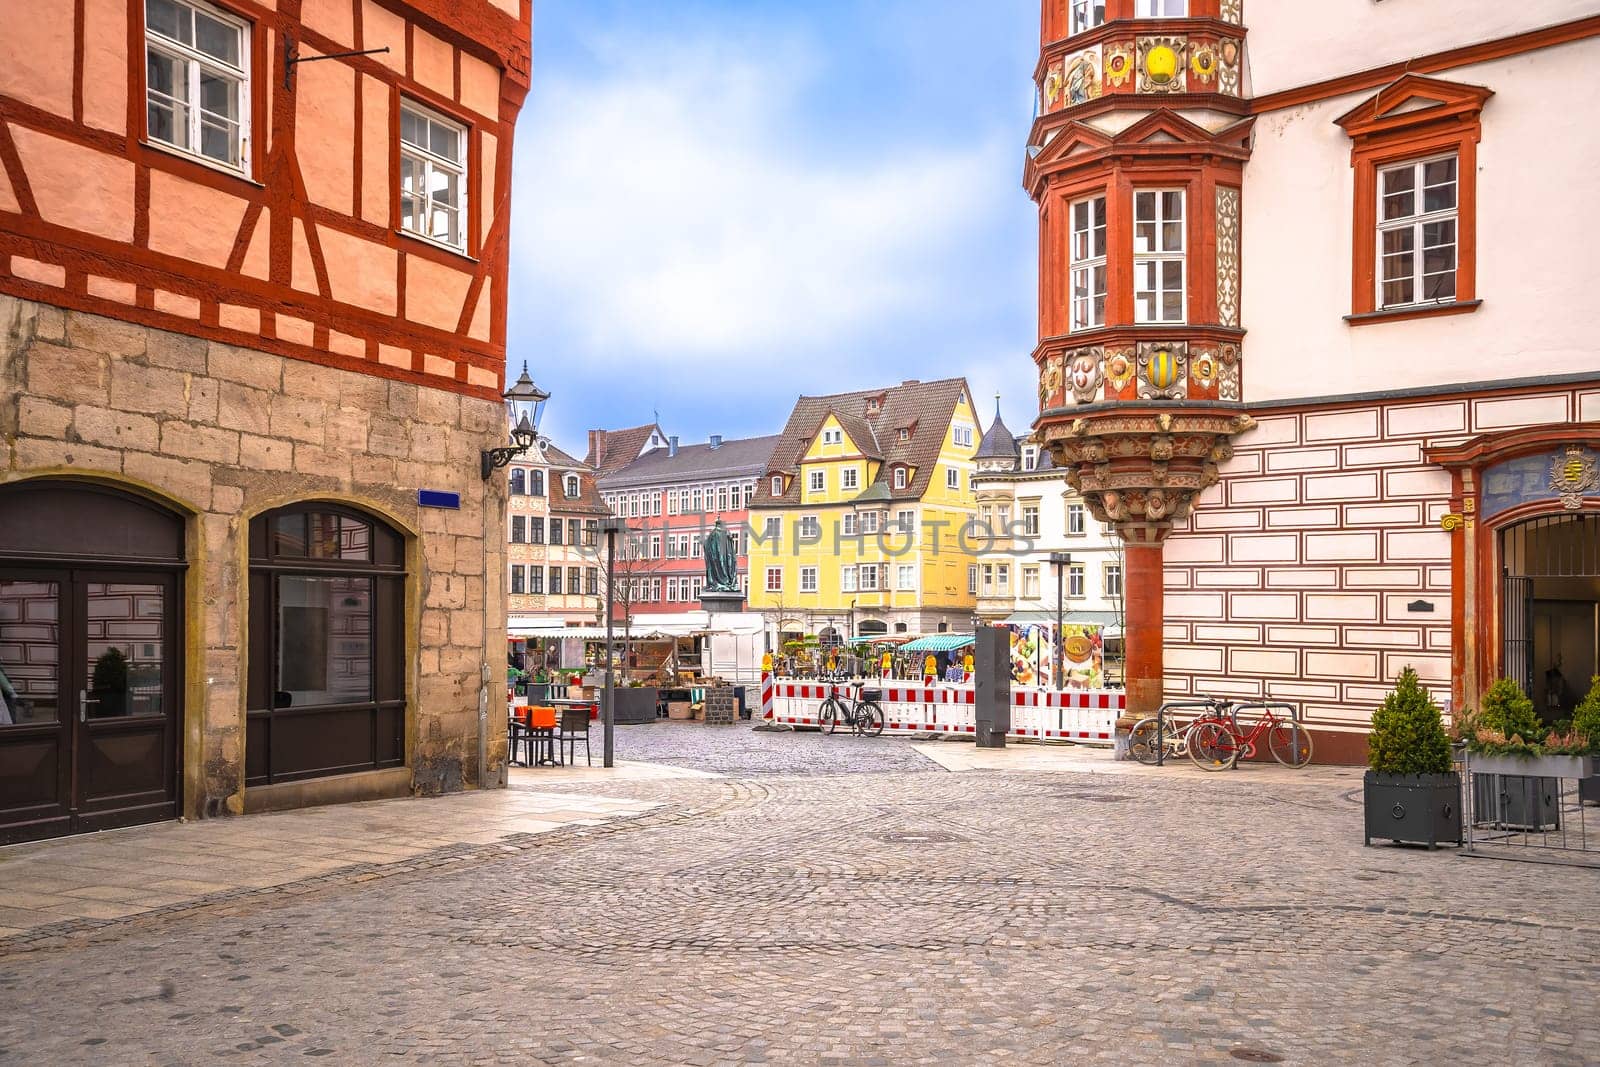 Historic town of Coburg main square Marktplatz colorful architecture view by xbrchx